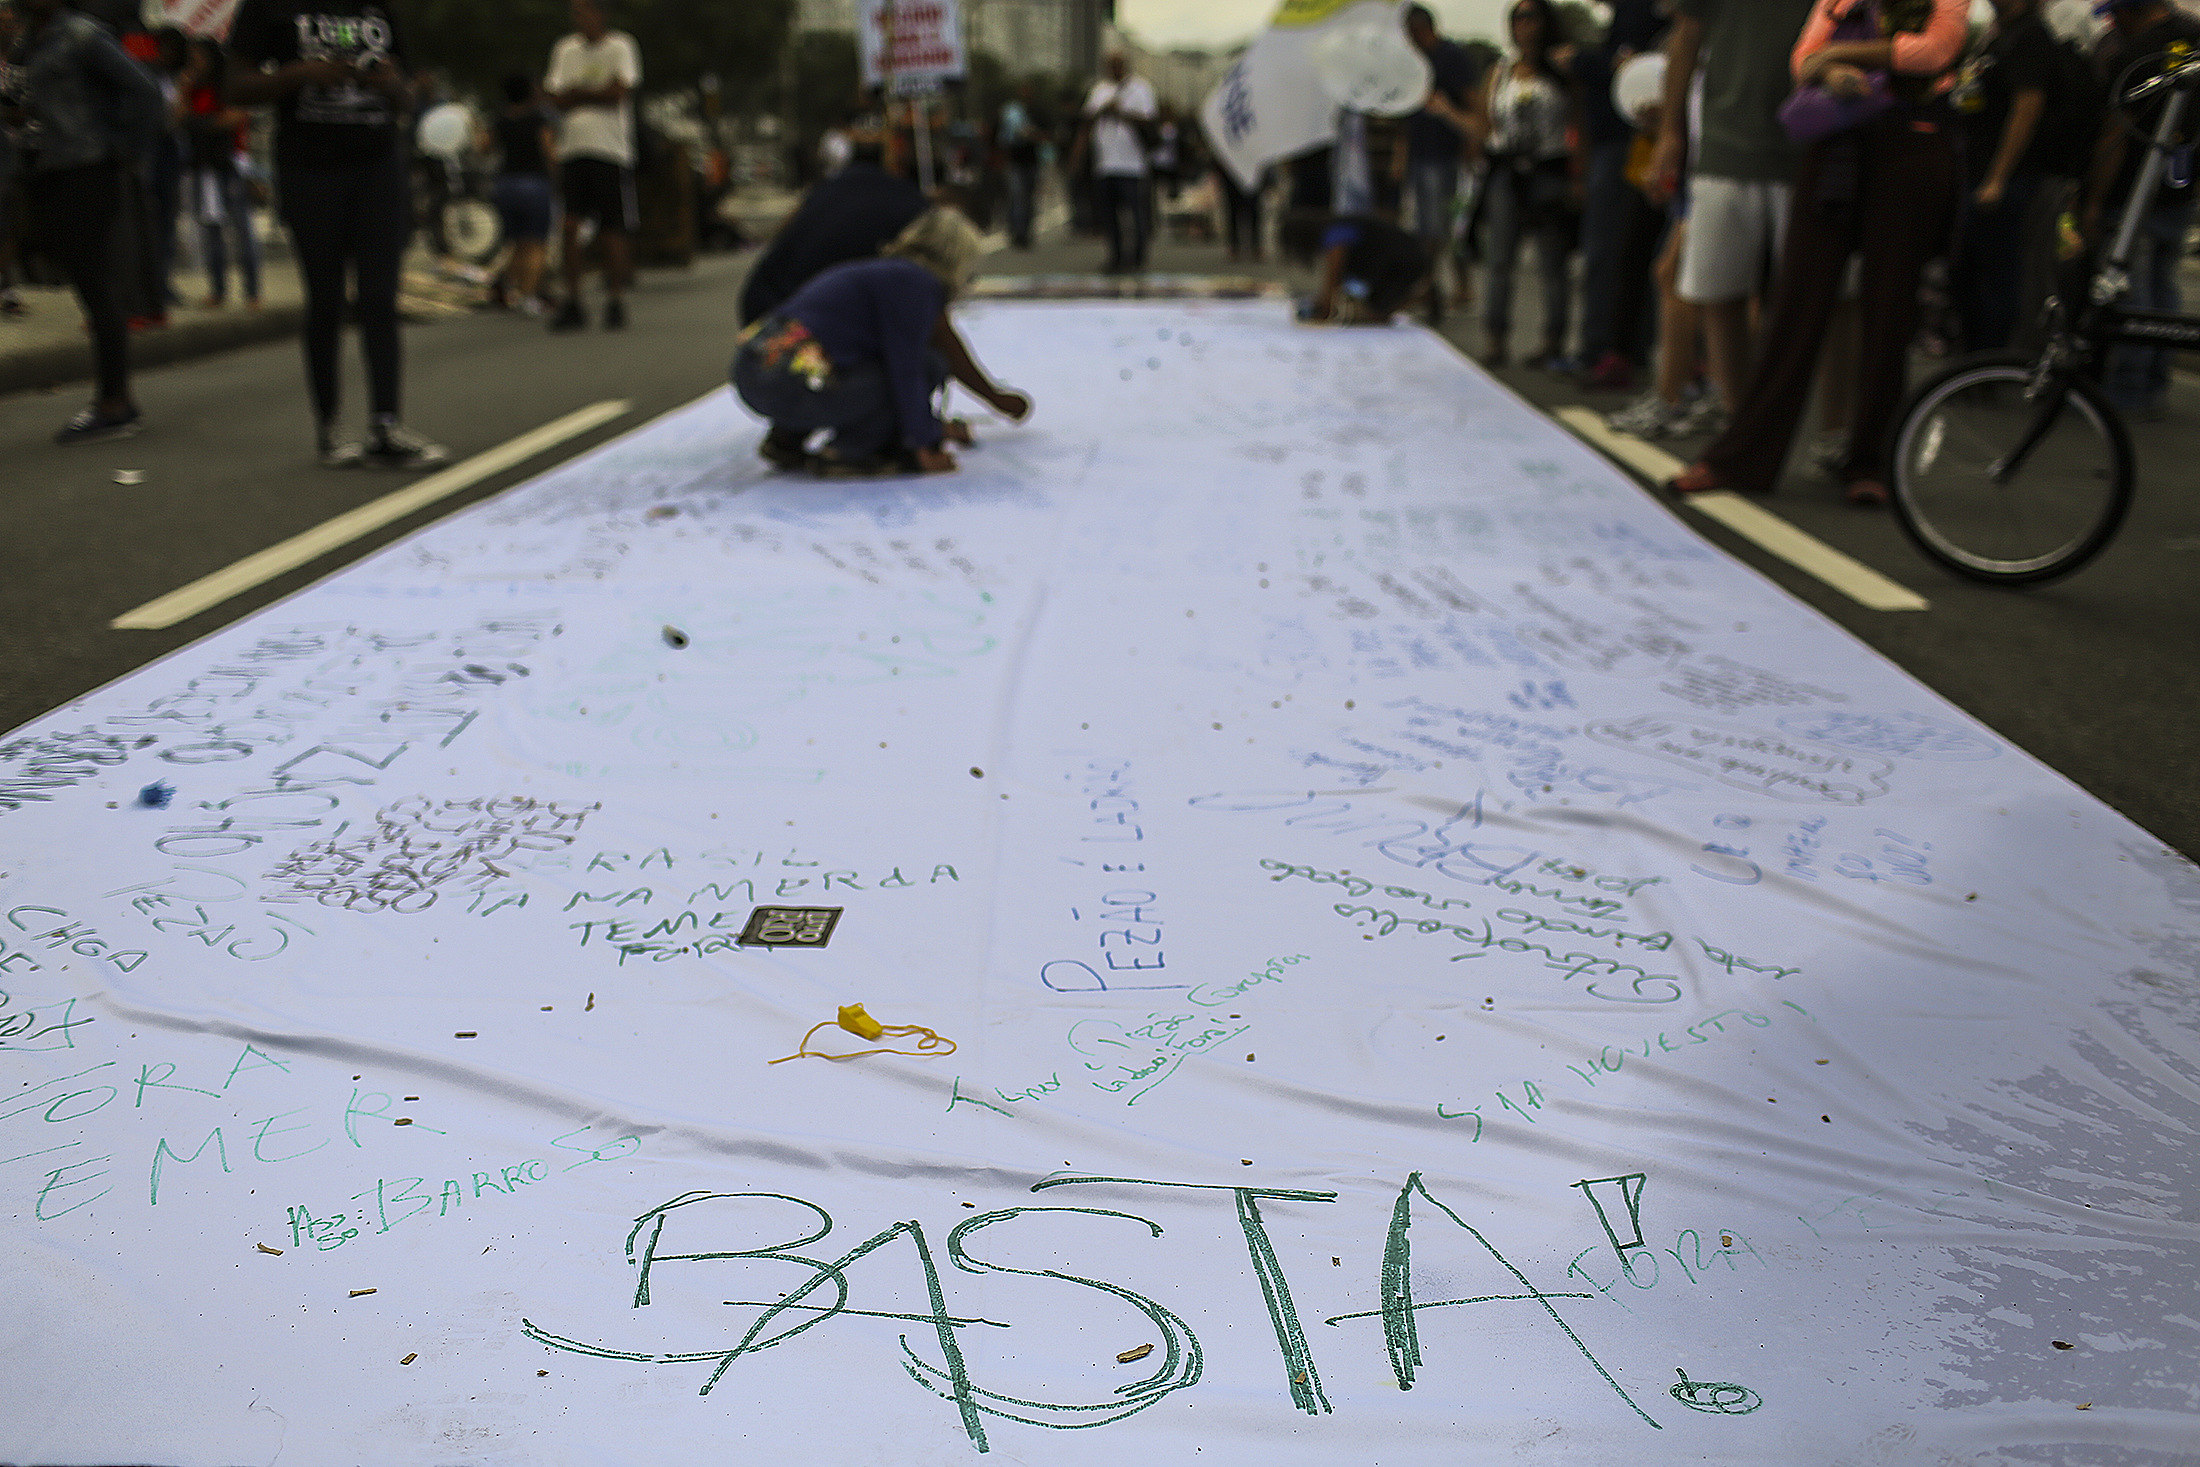 Brasil, michel temer, corrupción, marcha, manifestantes